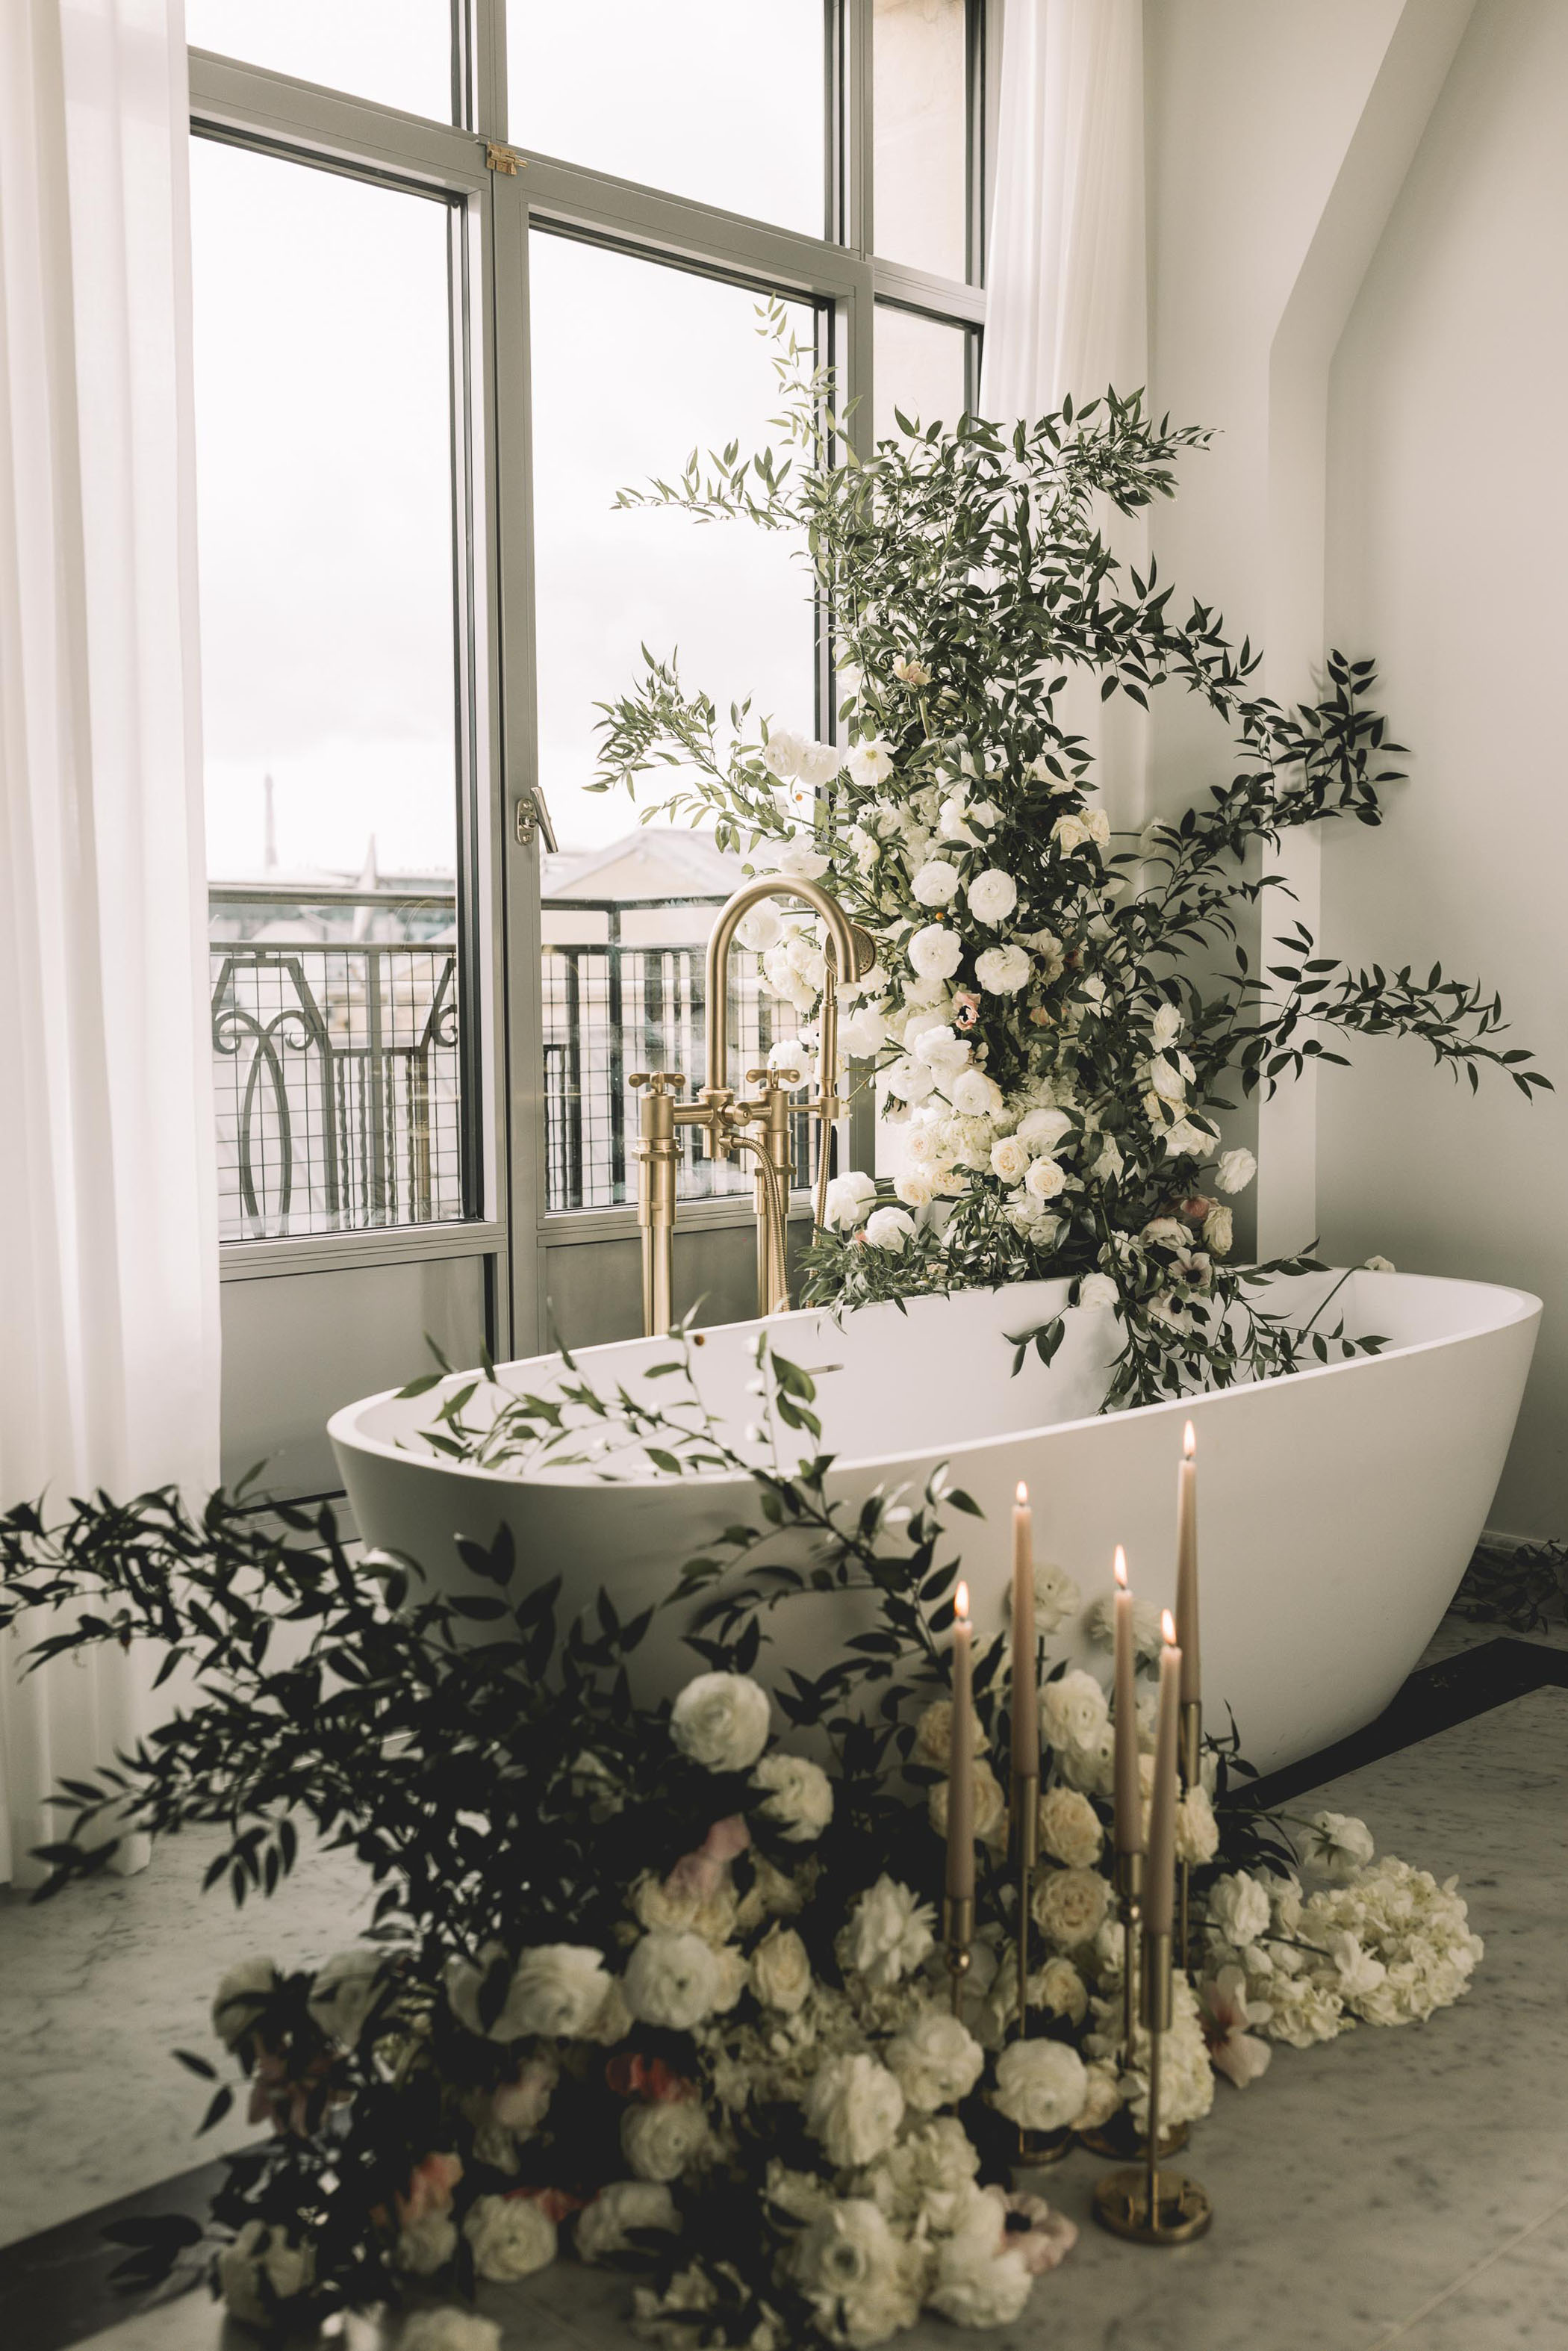 bathtub with flowers